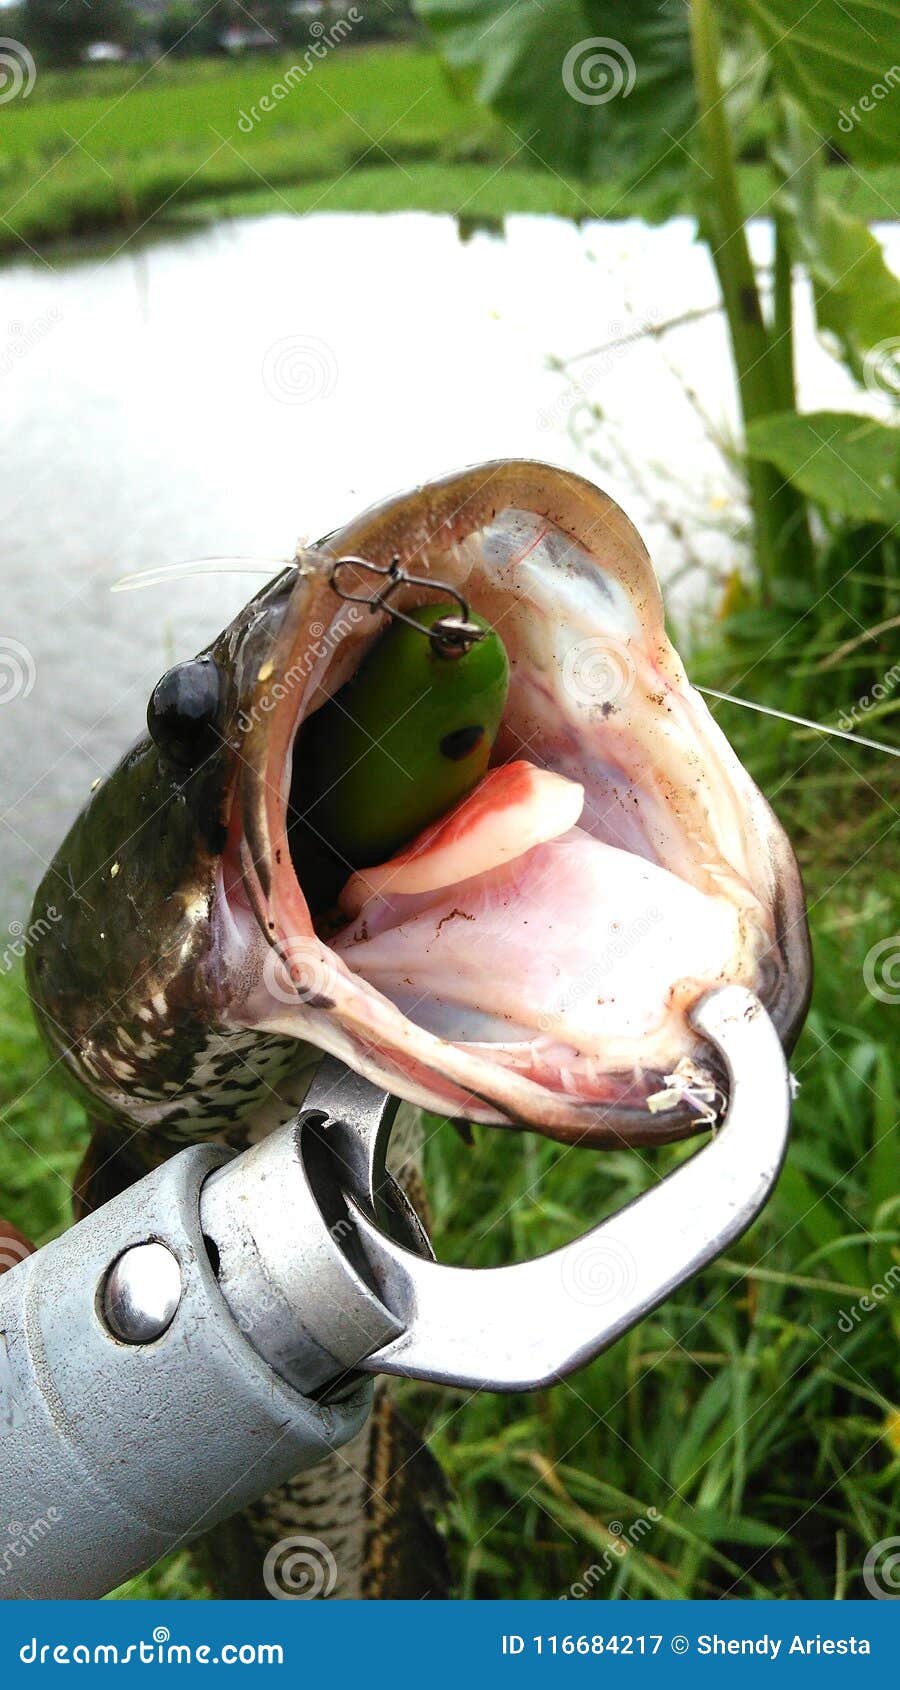 Snakehead fish stock image. Image of lure, fishing, froggy - 116684217